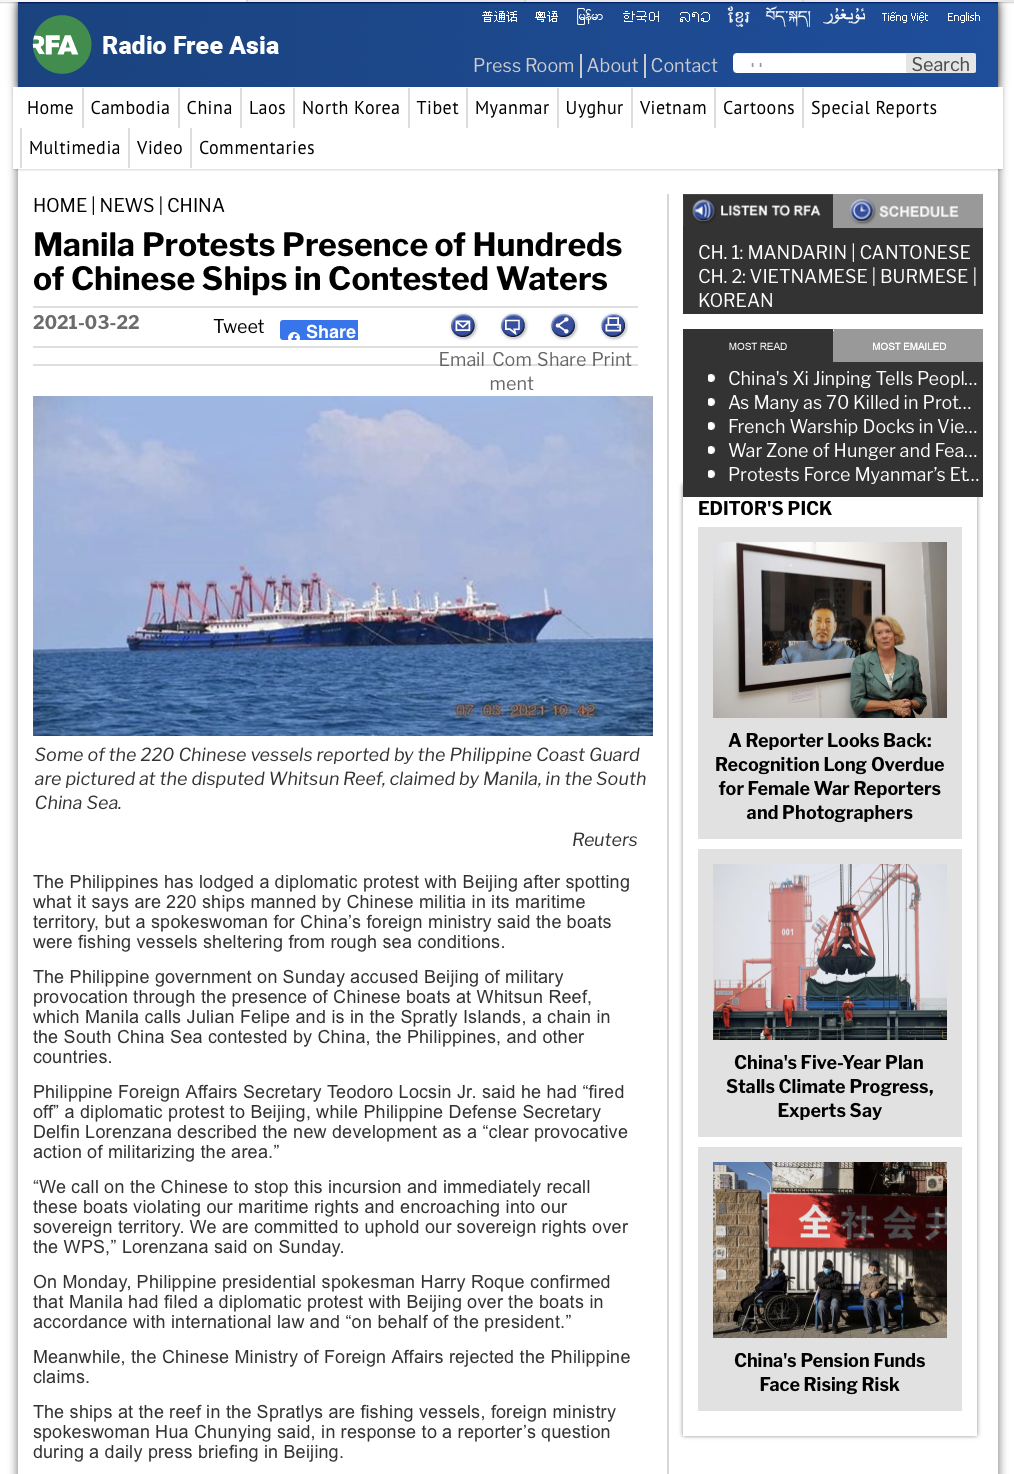 The China Maritime Militia Bookshelf: Latest Developments